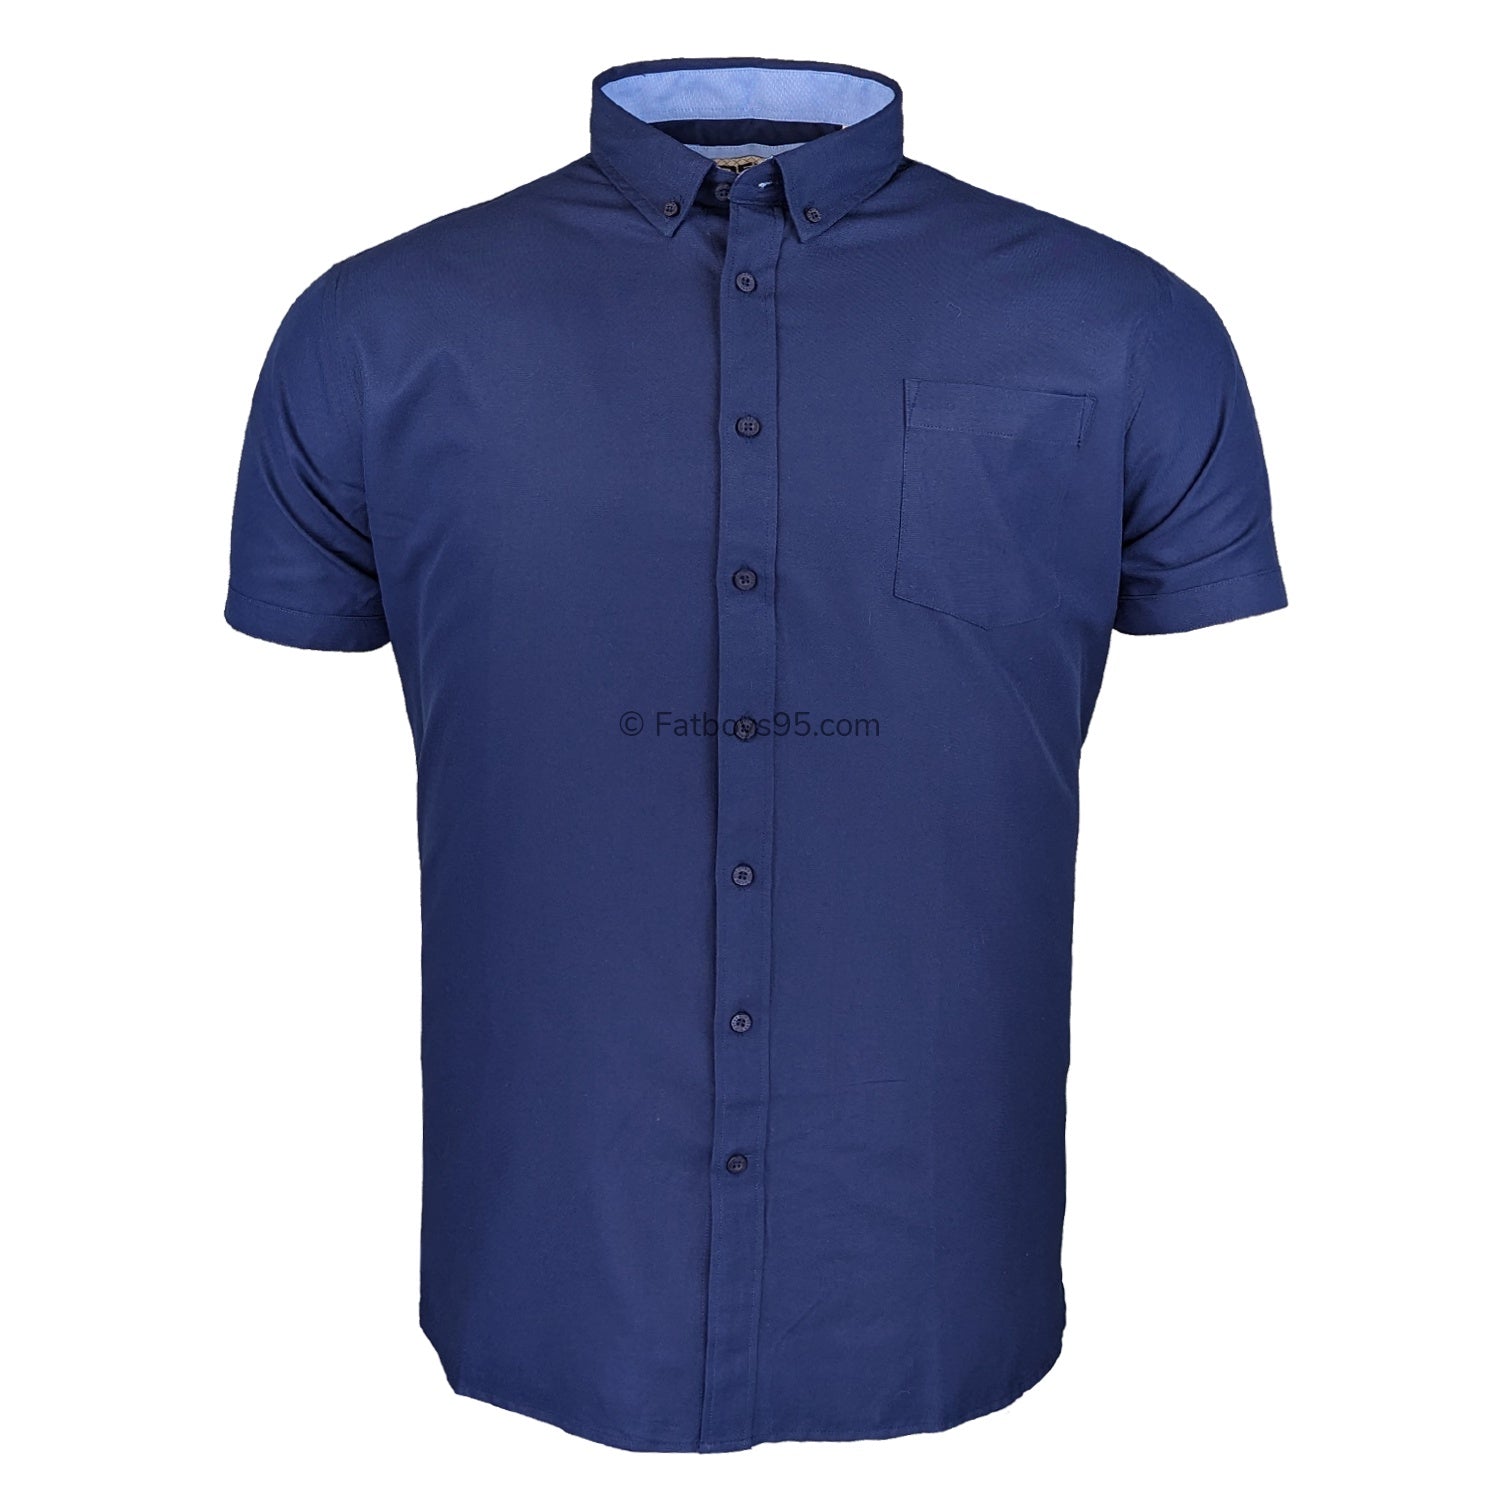 D555 S/S Oxford Shirt - James - Navy 1